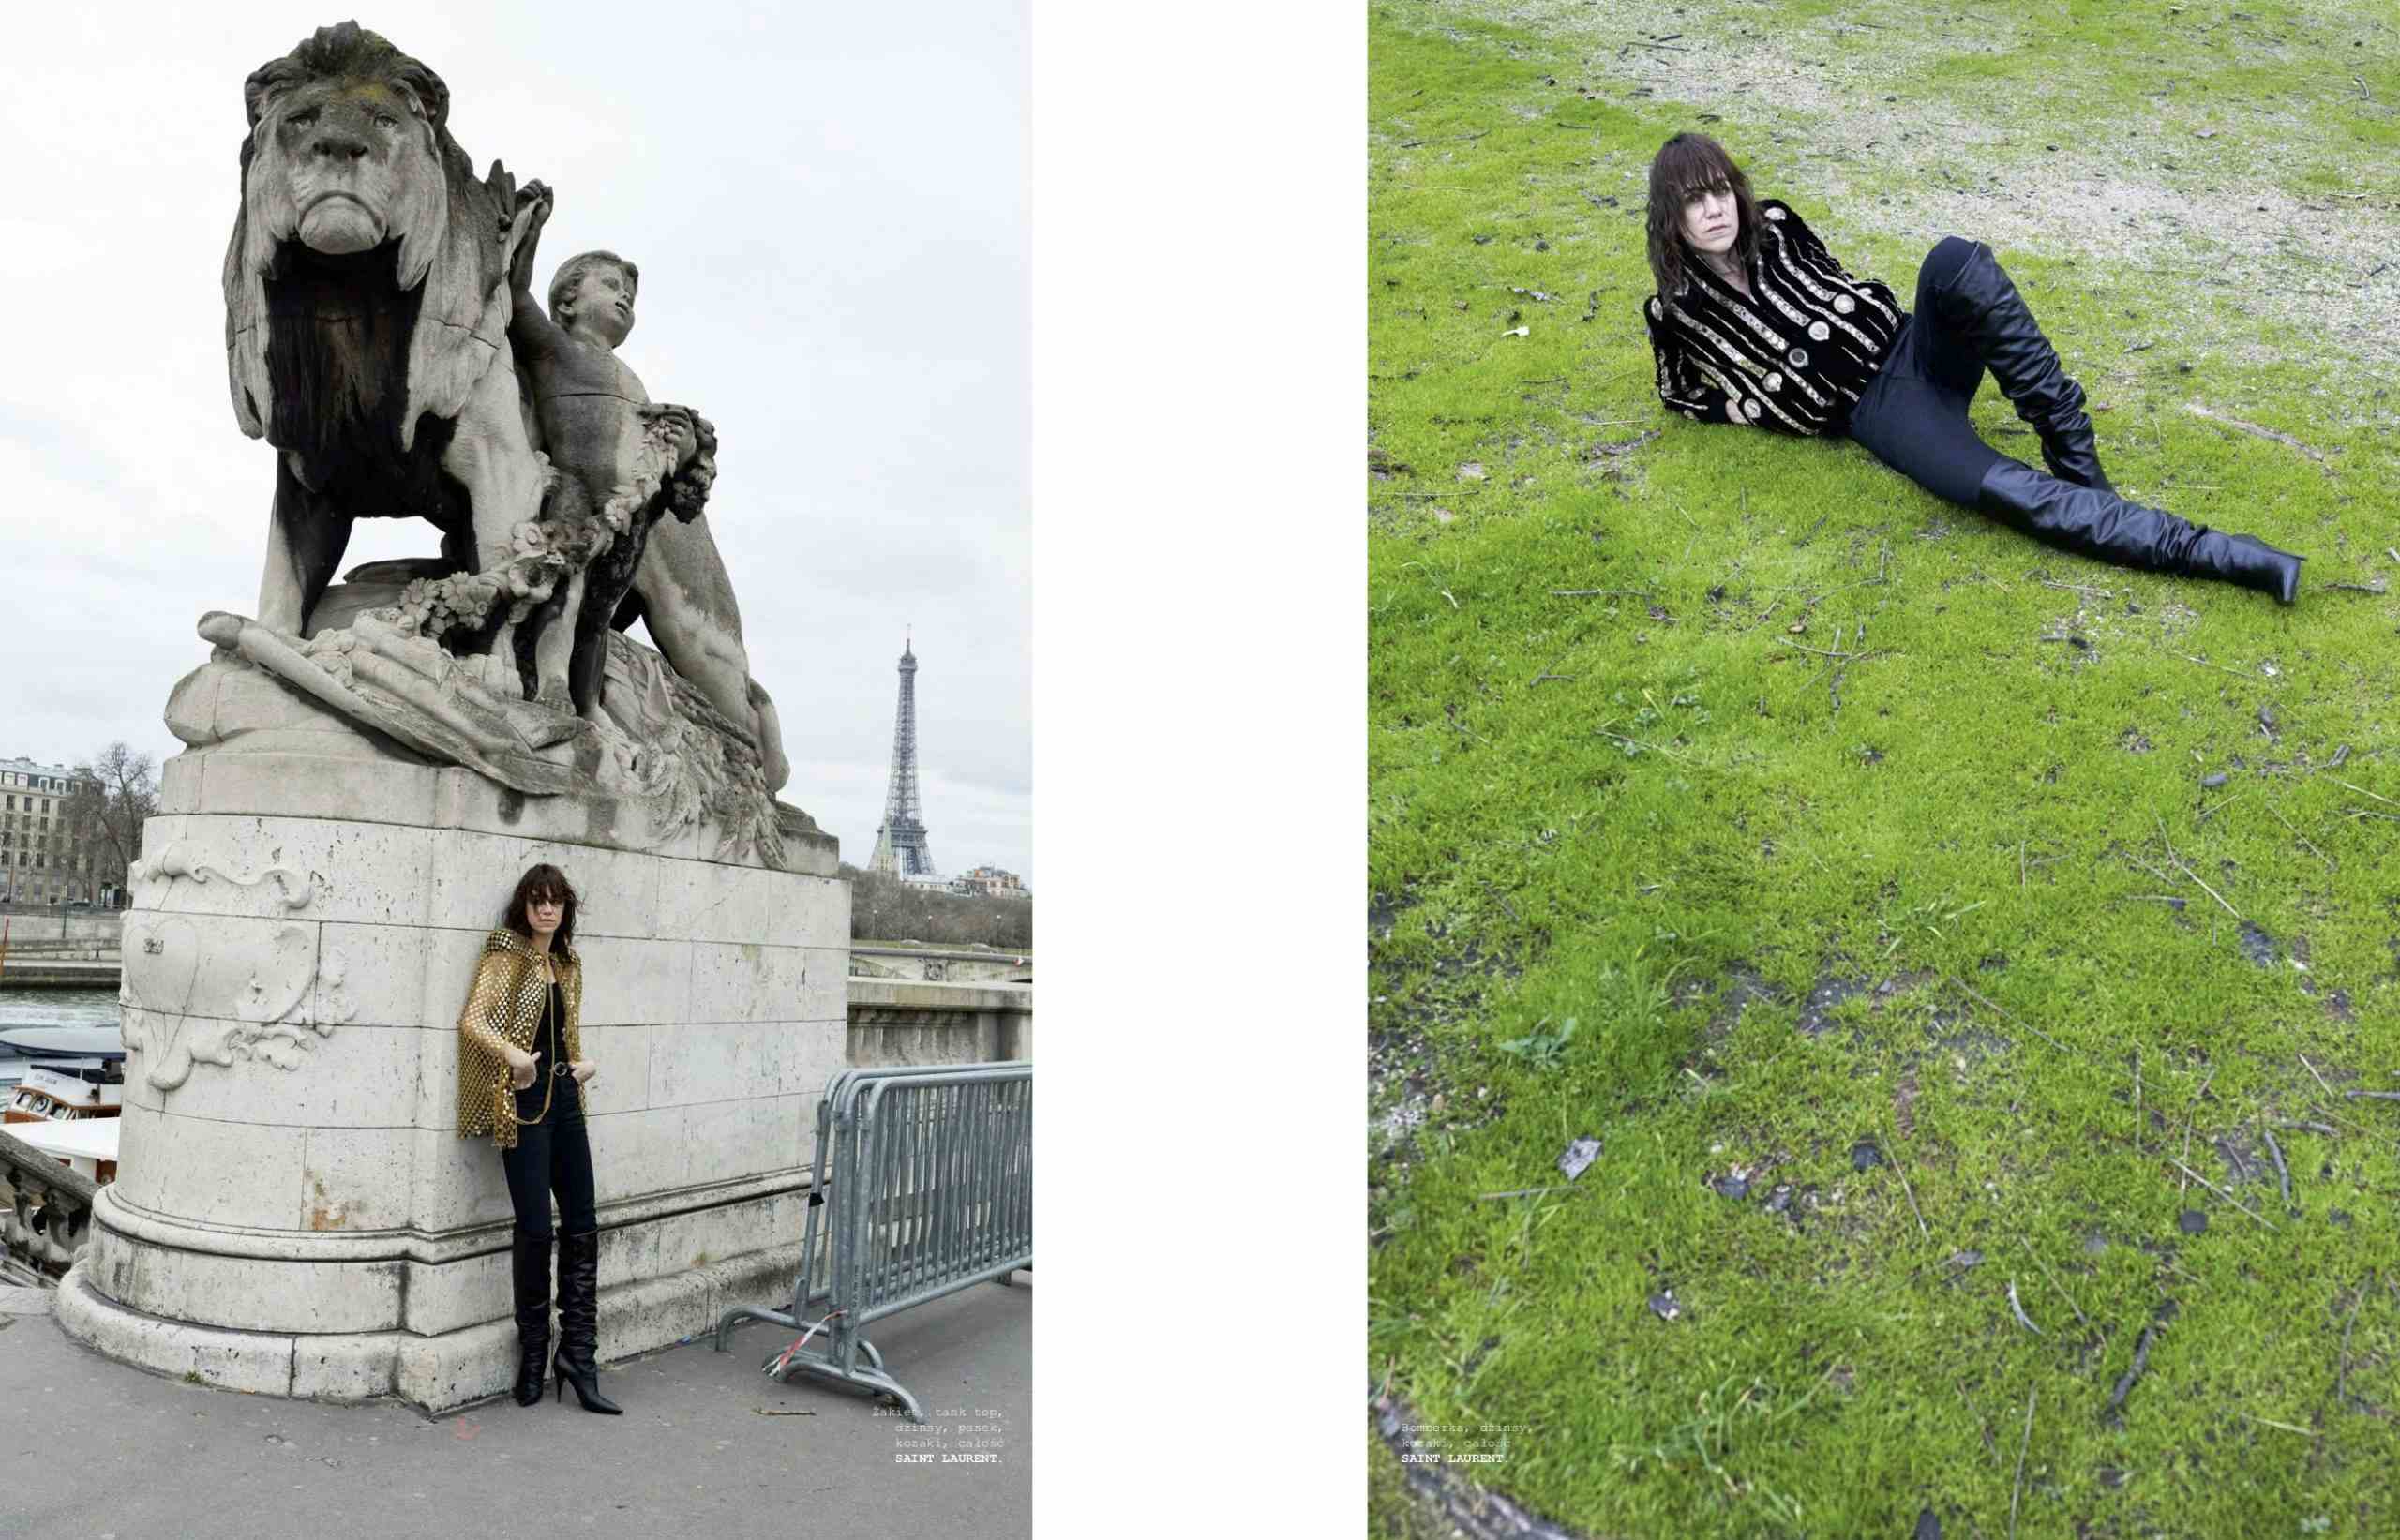 VOGUE POLAND - May 2019
Photographer: Juergen Teller
Model: Charlotte Gainsbourg
Location: Paris